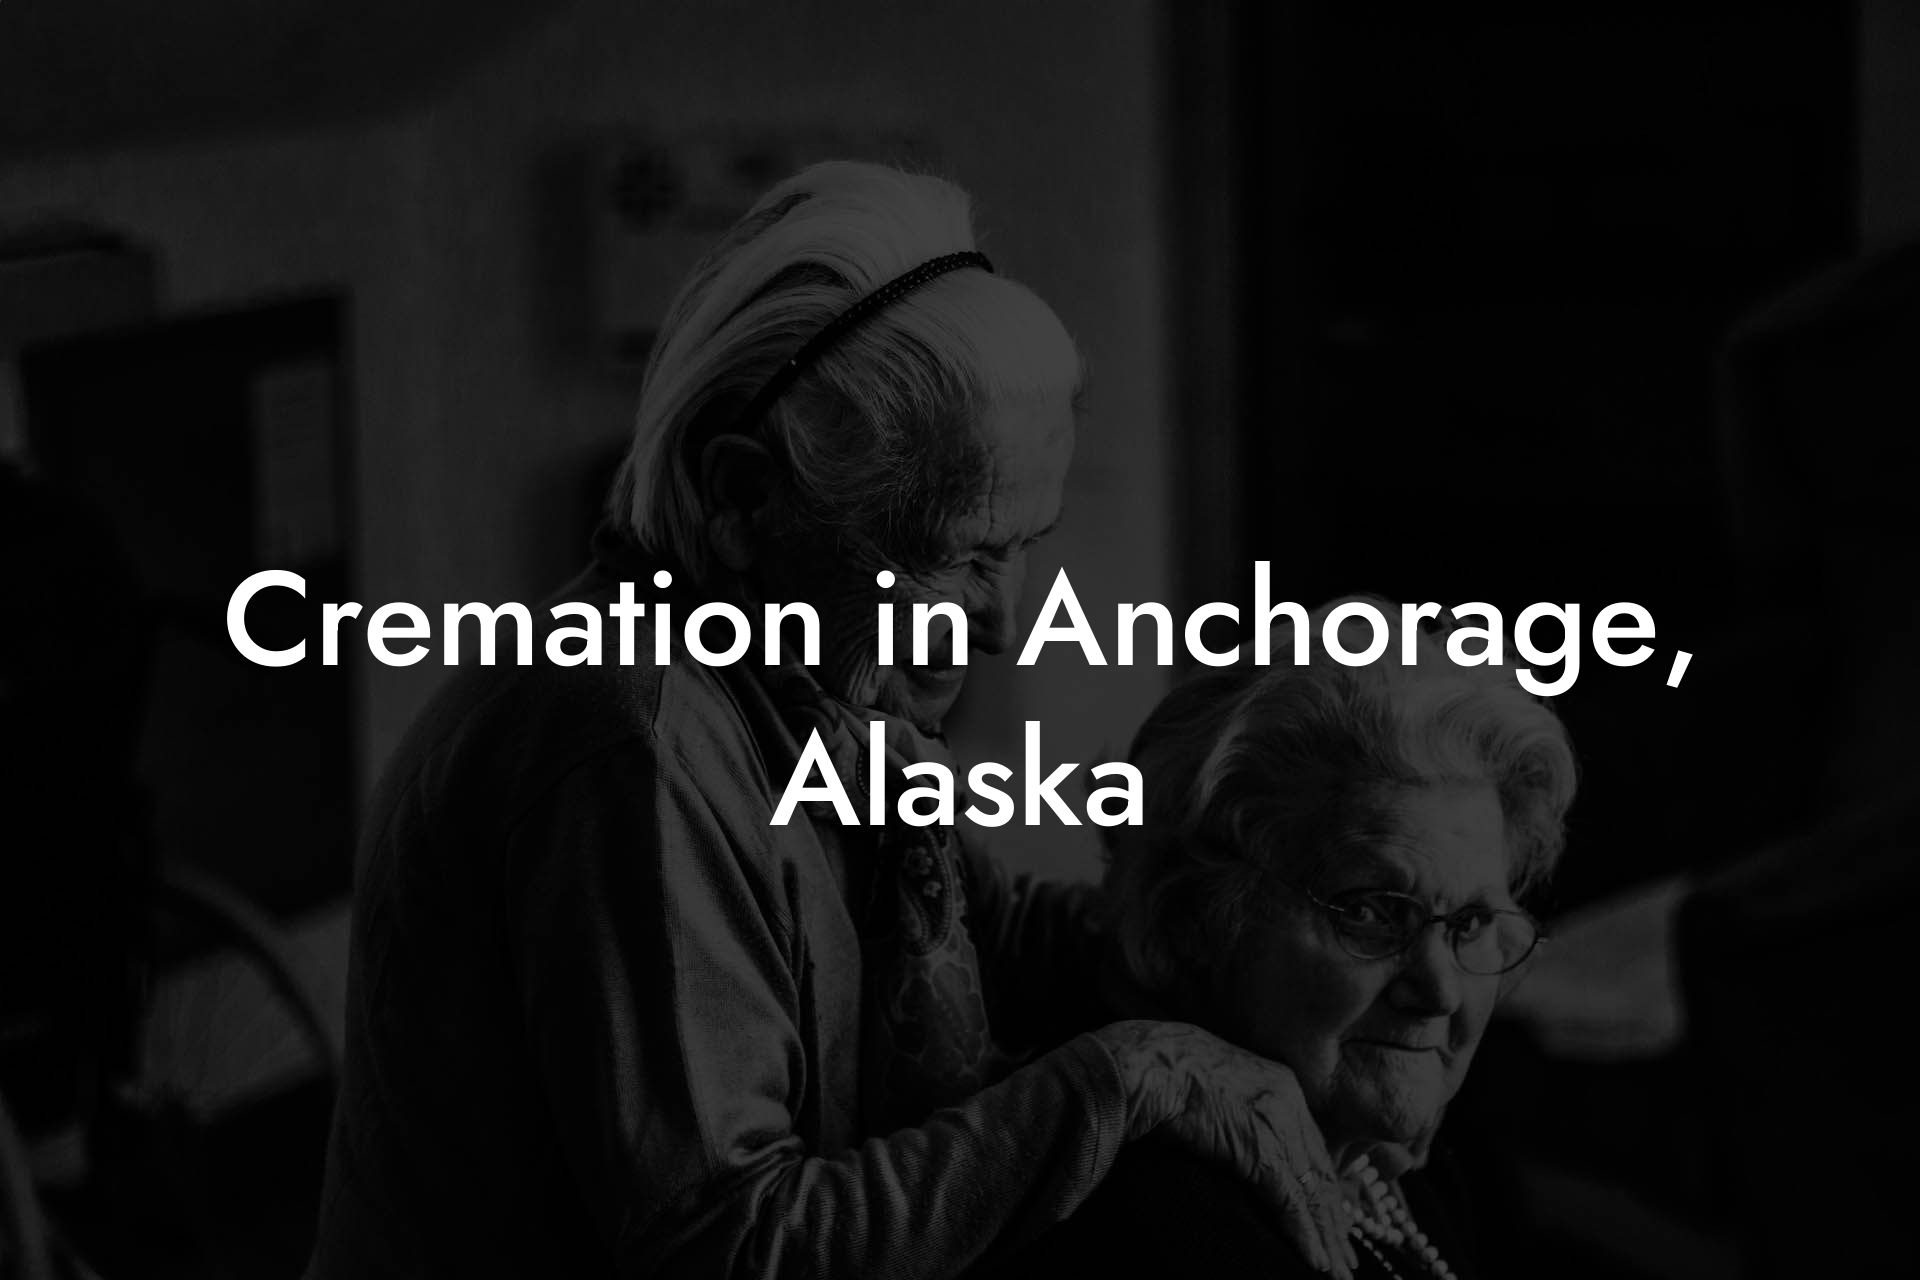 Cremation in Anchorage, Alaska